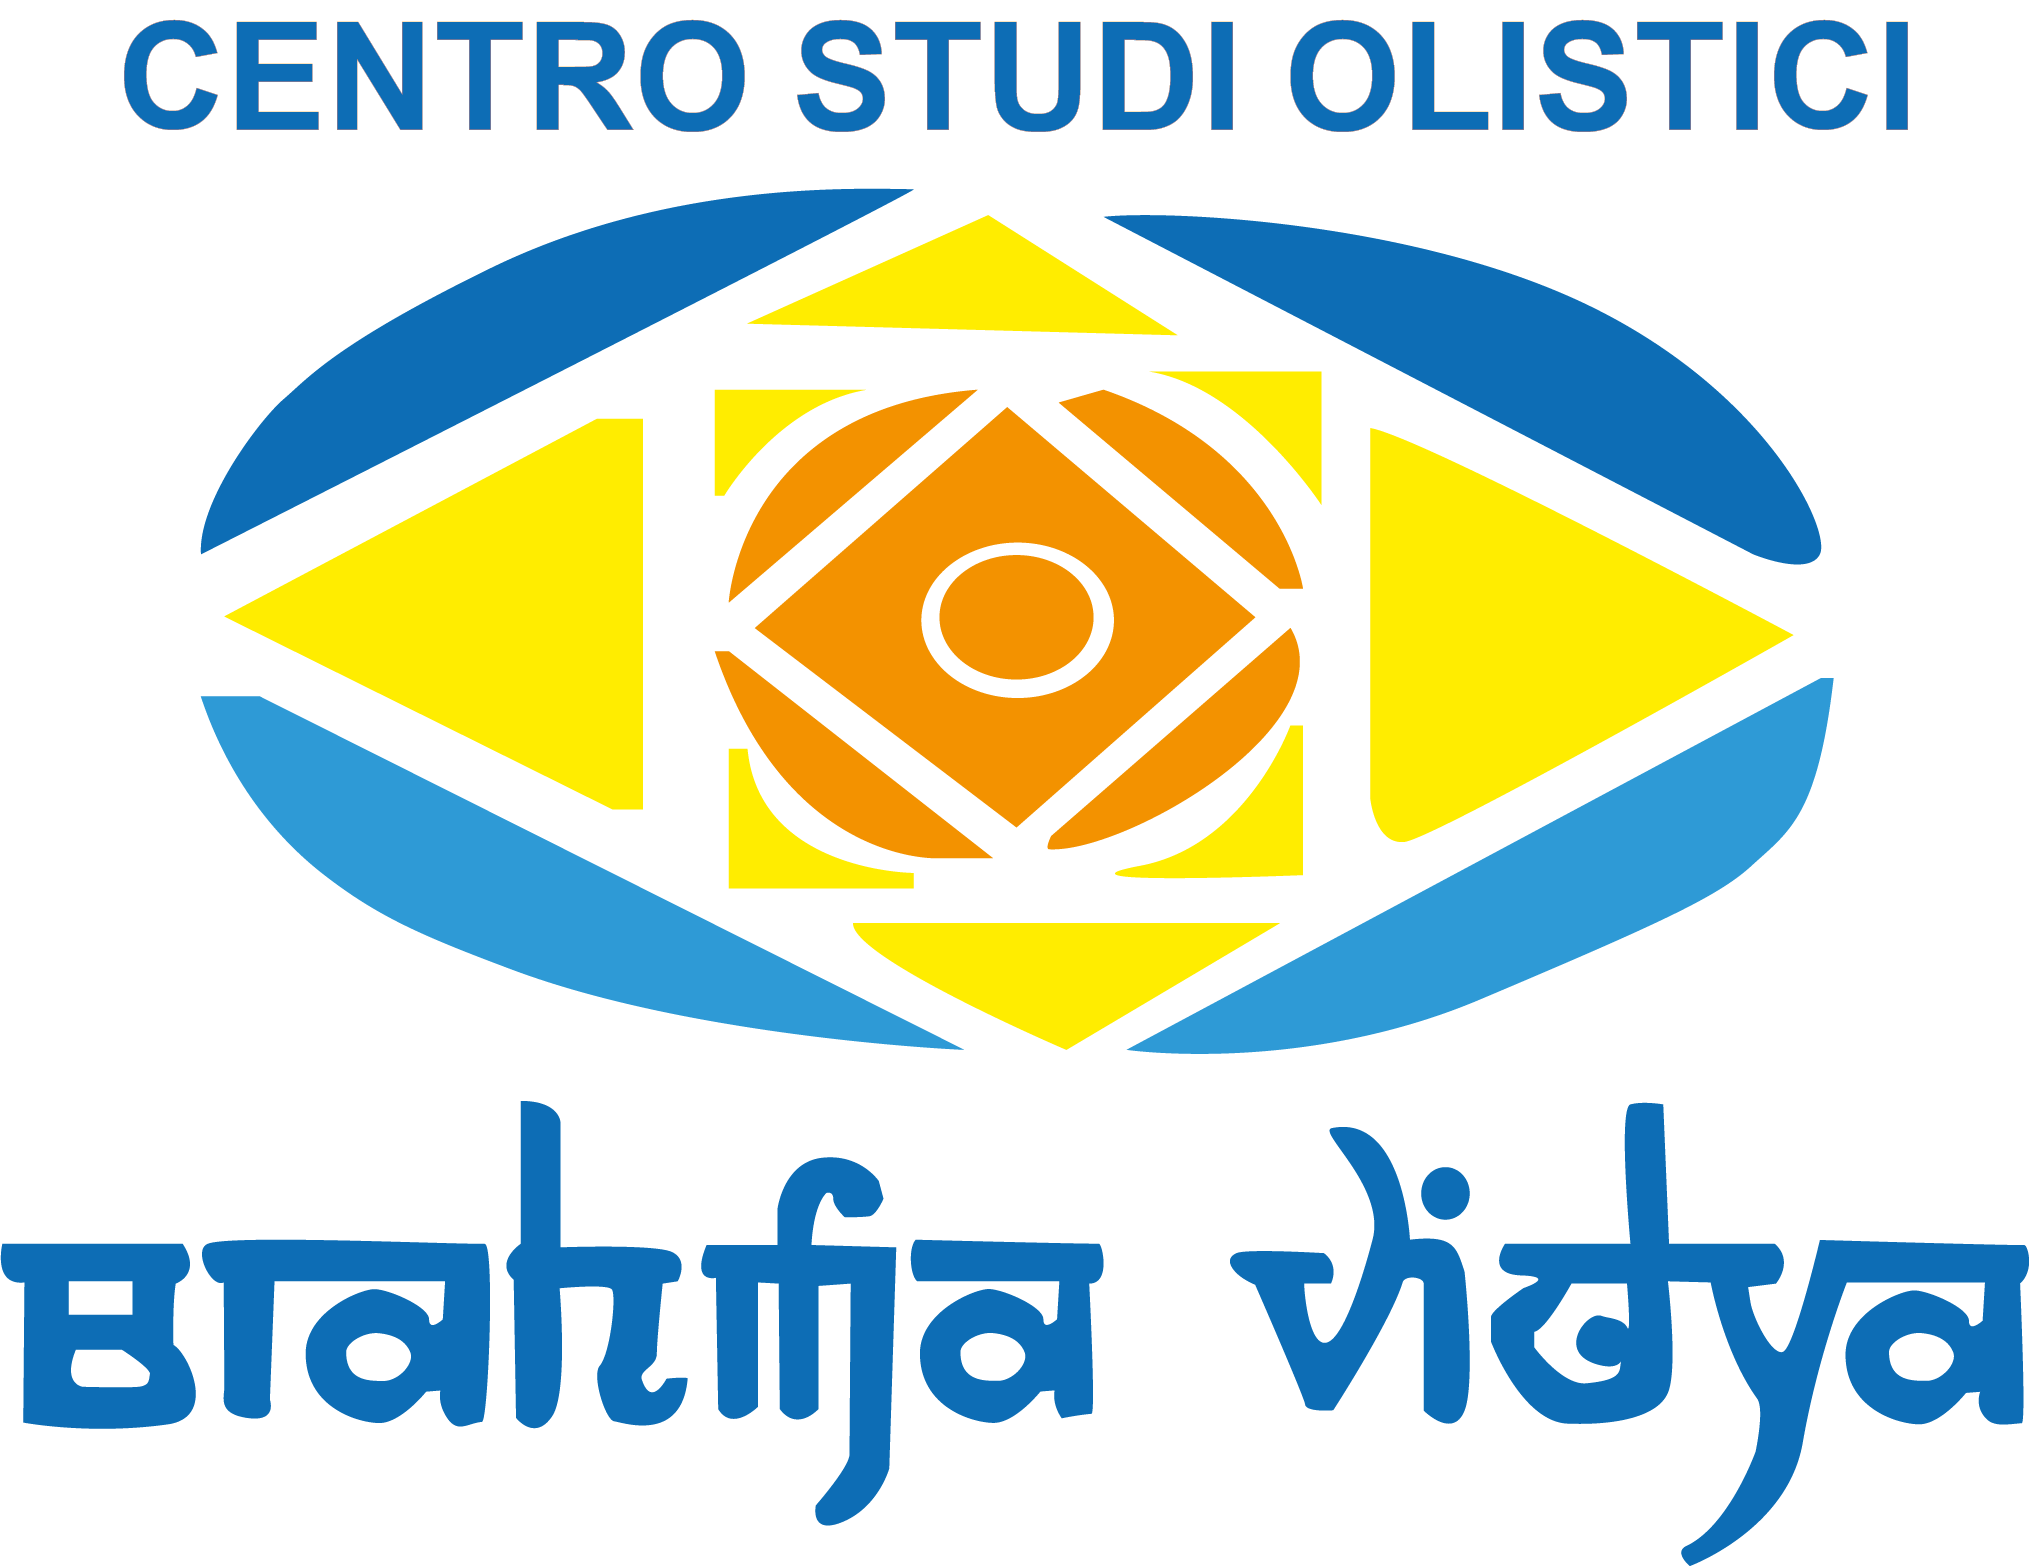 Centro Studi olistici Brahma Vidya